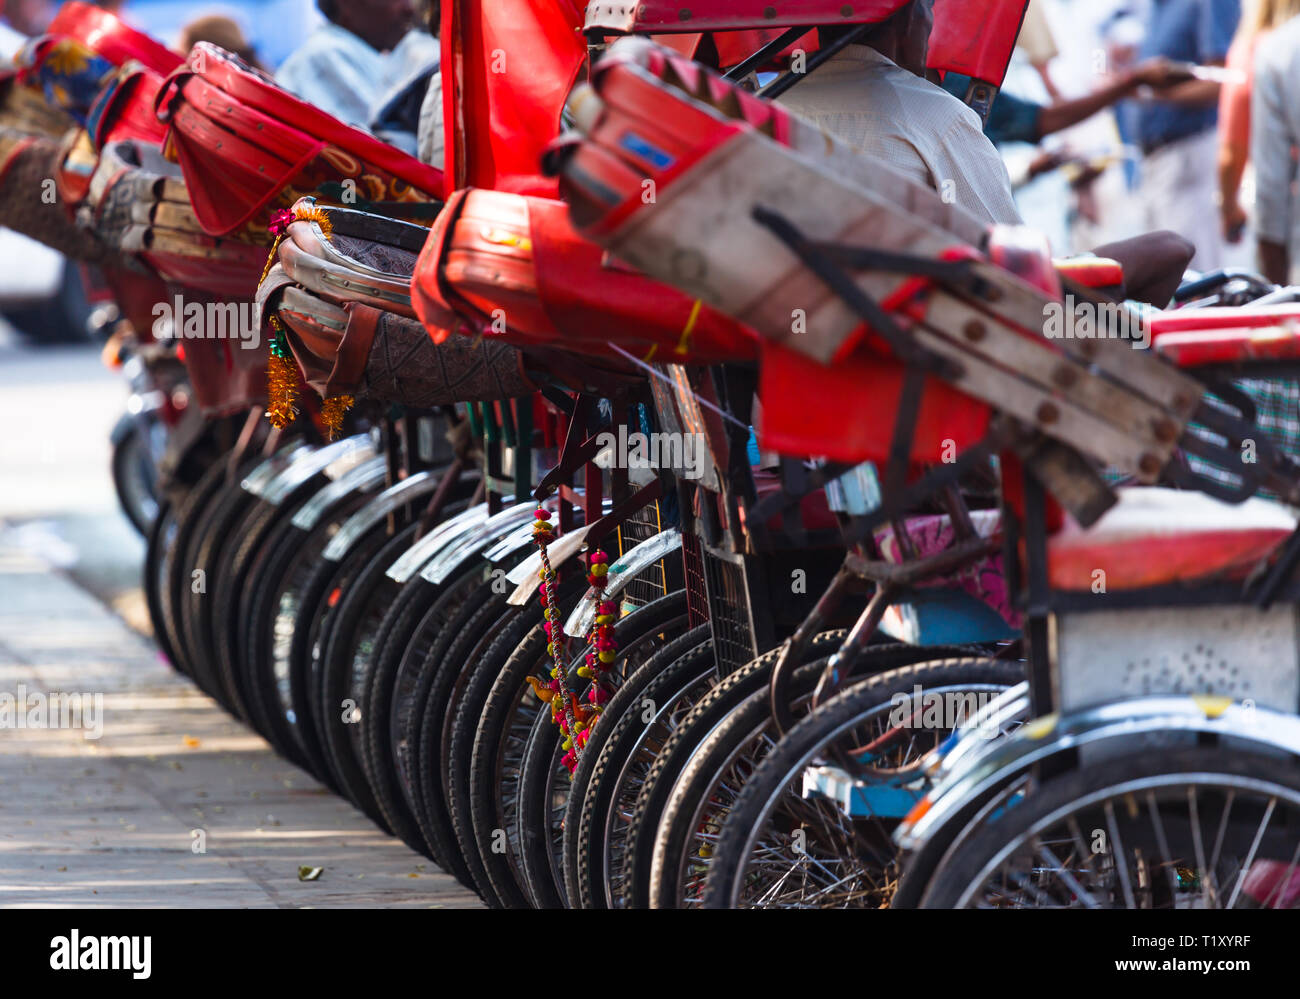 Bicycle rickshaw Parking of traditional Indian design Stock Photo